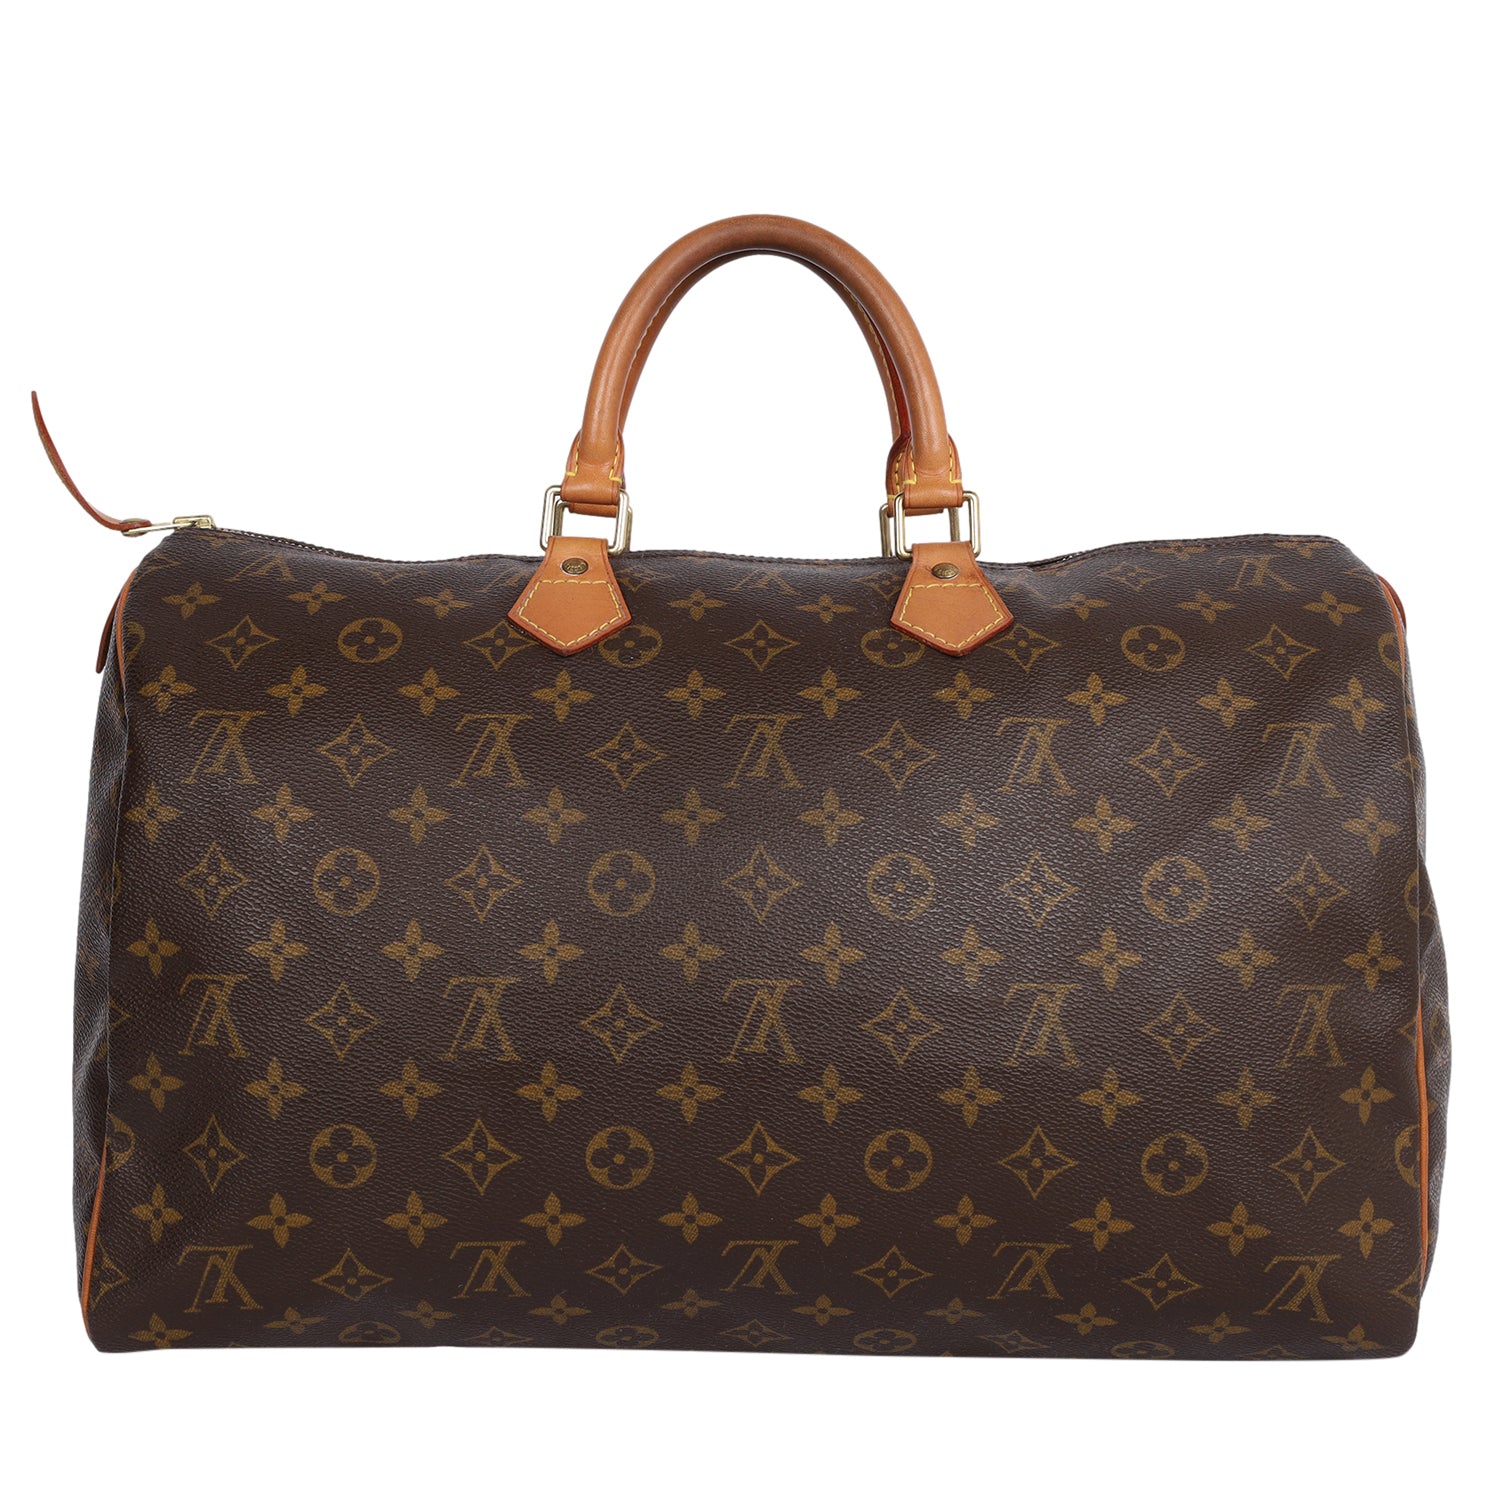 Louis Vuitton, Bags, Authentic Louis Vuitton Satchel Bag Speedy 3  Monogram Mini Lin Used Lv Handbag